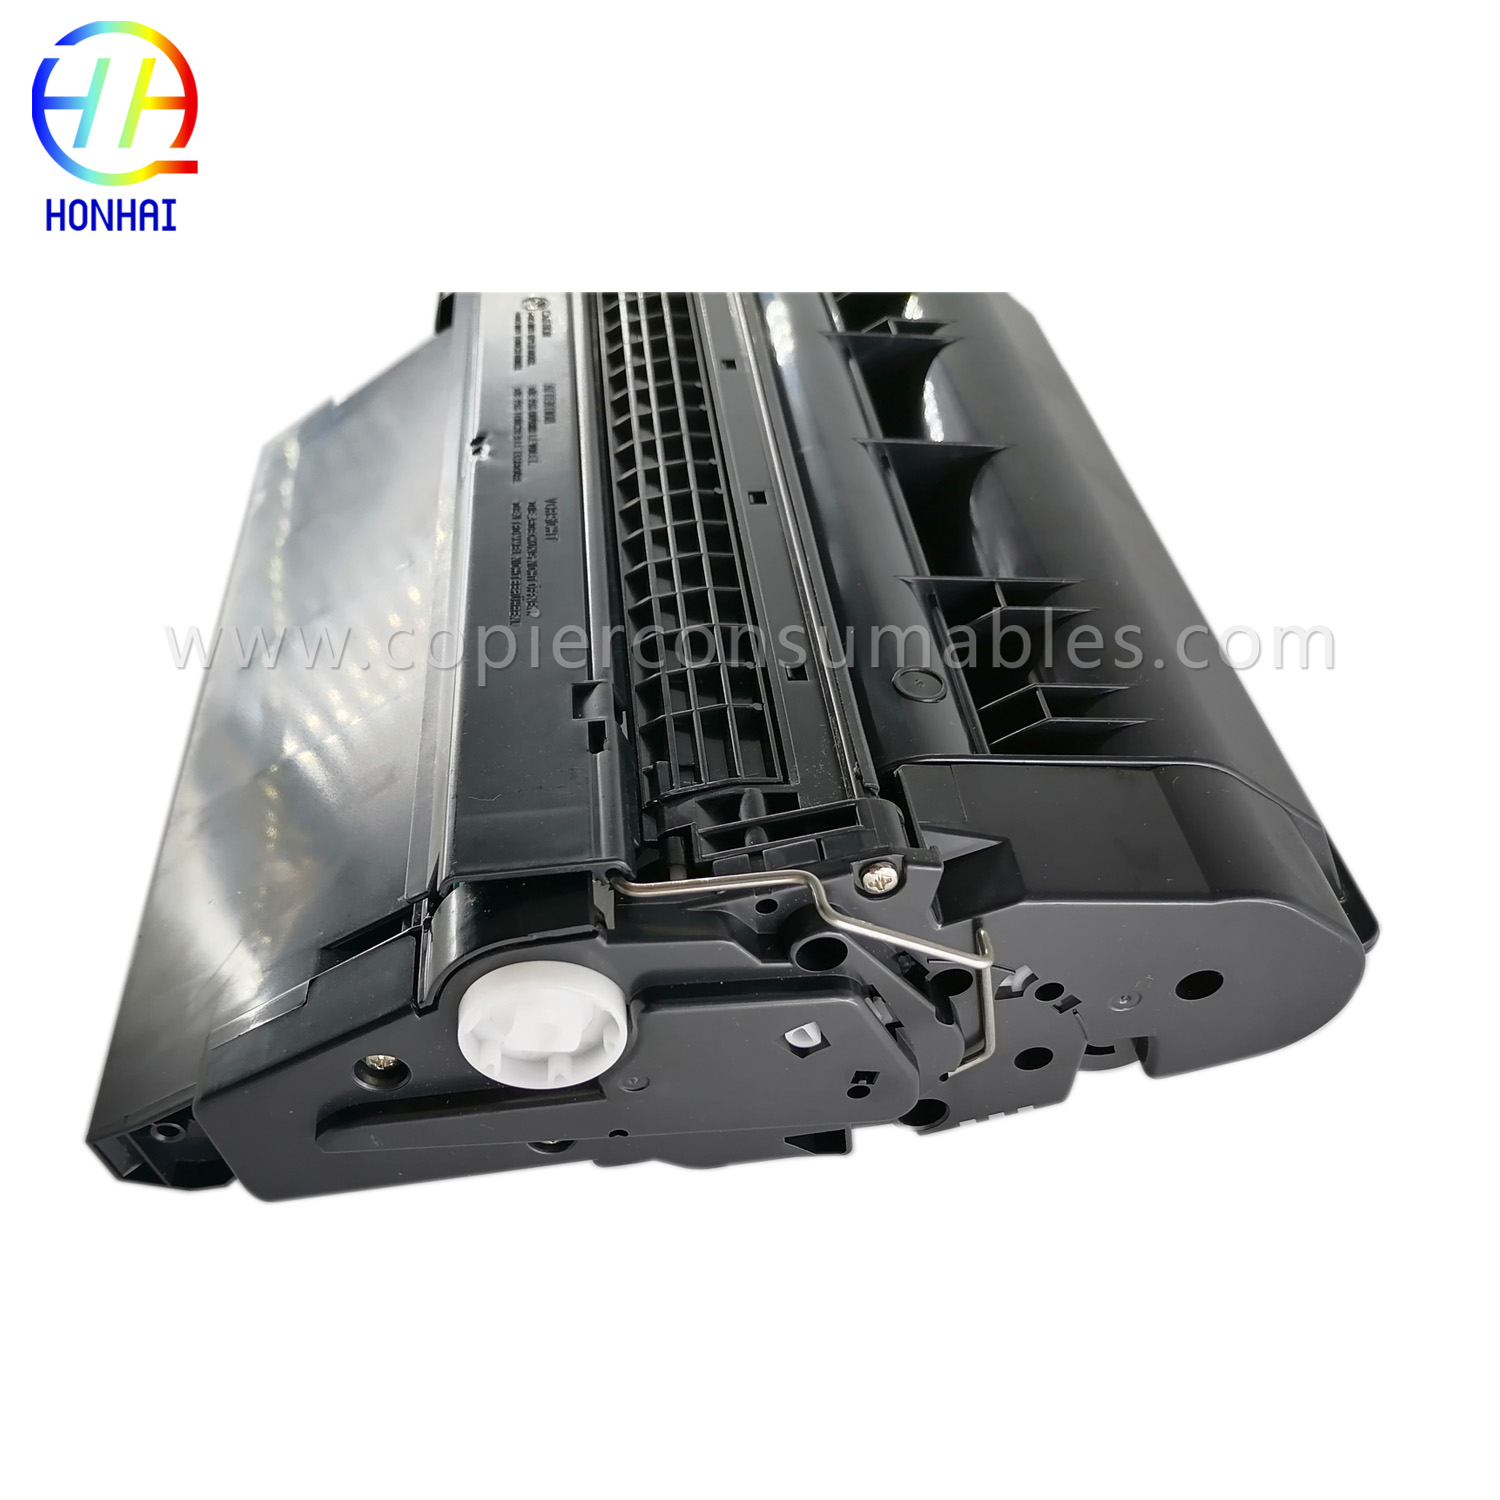 Cartucho de tóner para HP Laserjet 4240 4250 4350 (42A Q5942A)(7).jpg-1 拷贝